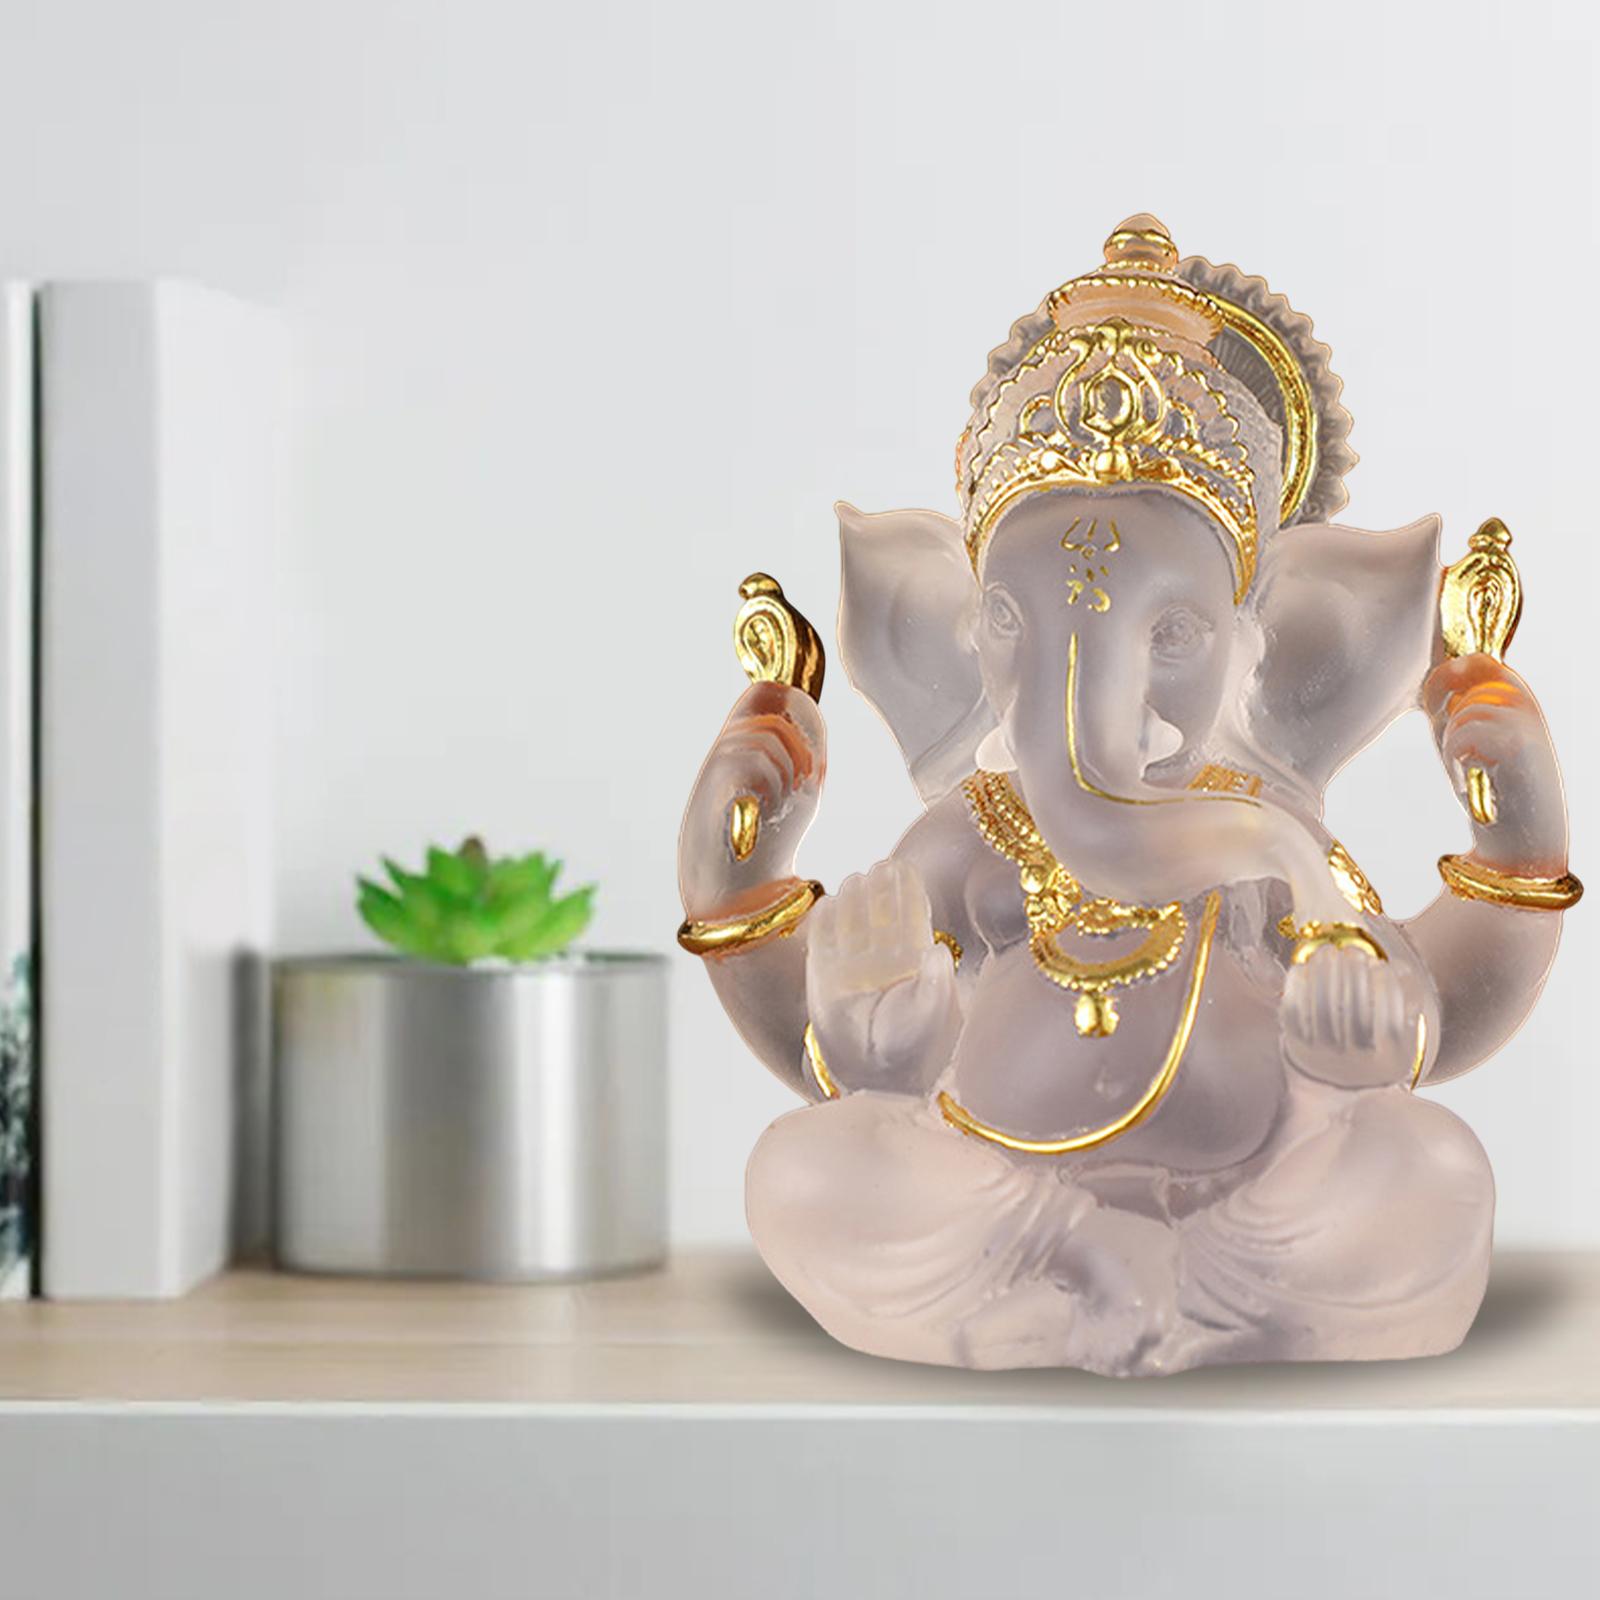 Ganesha Figurine Indian Fengshui Lord Ganesh Statues Home Ornaments Crafts White